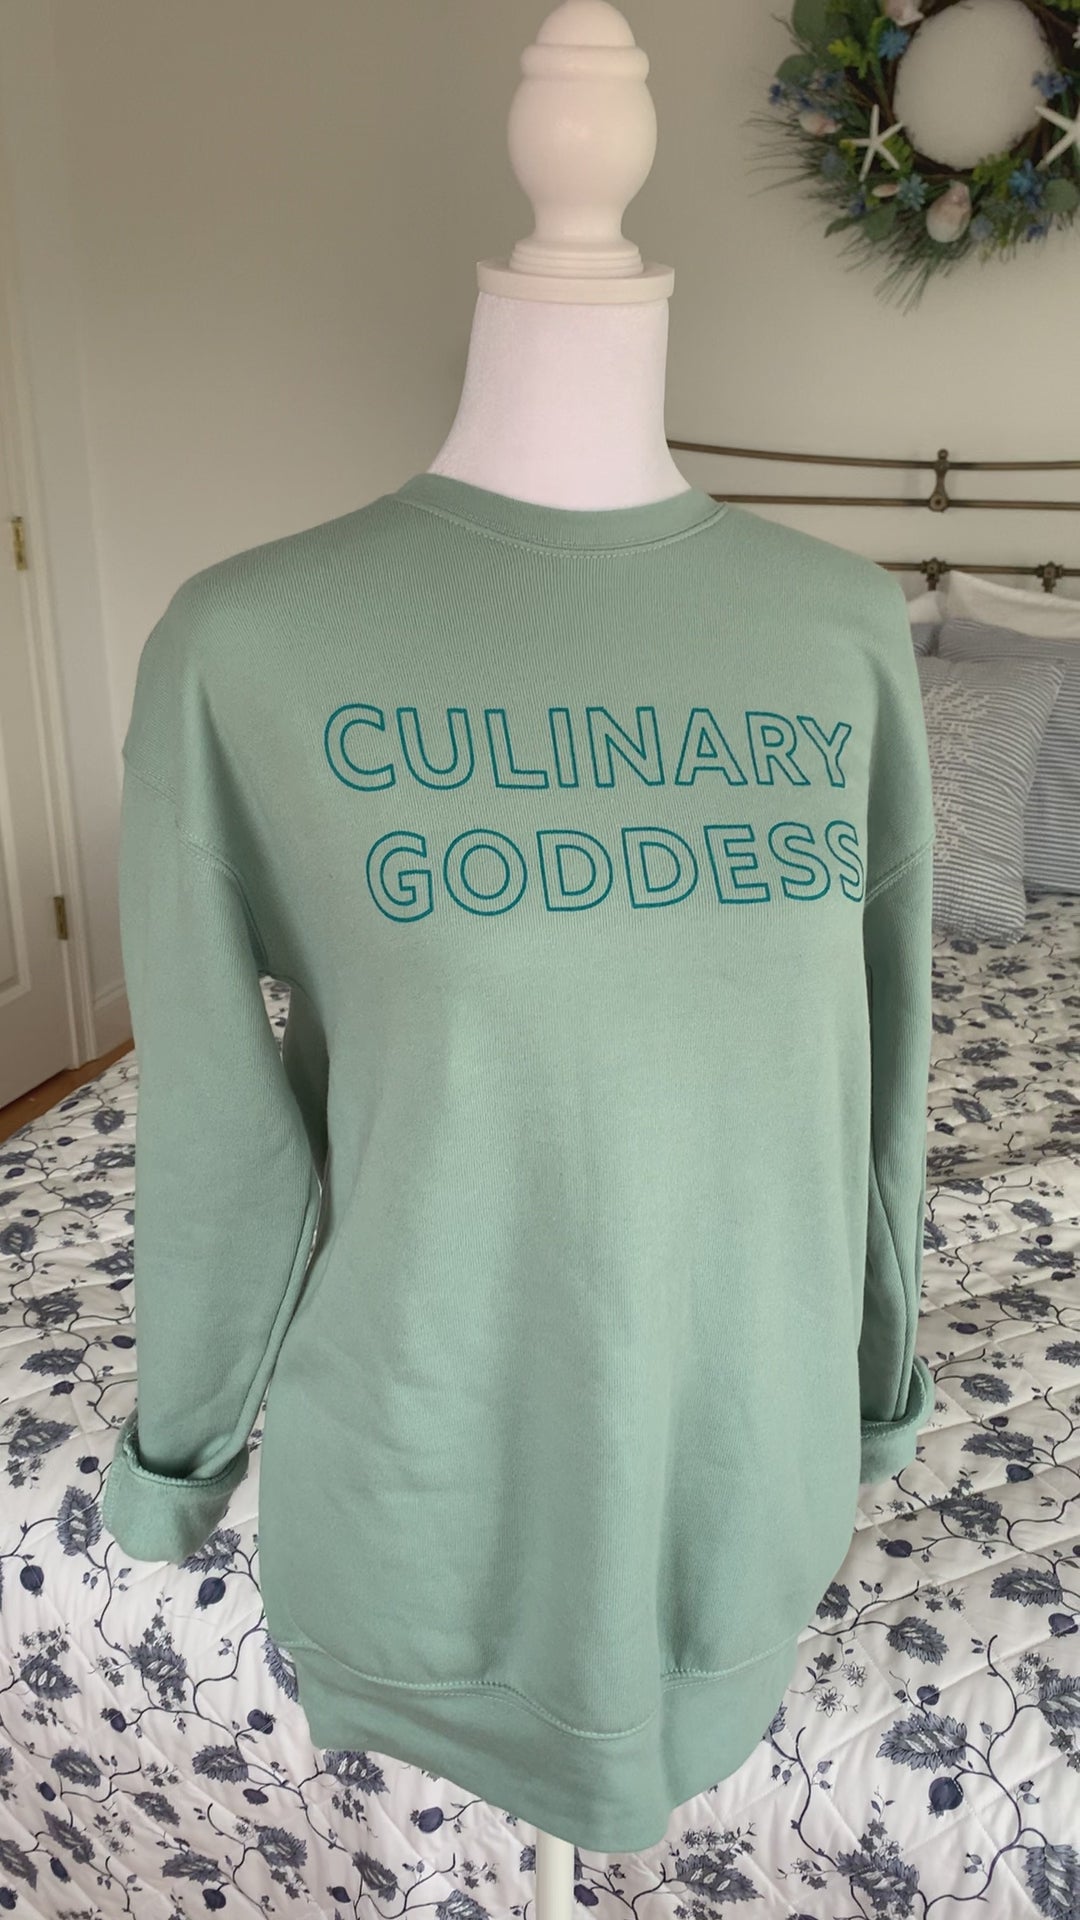 A dusty blue crewneck sweatshirt with the words "Culinary Goddess" hangs on a manikin